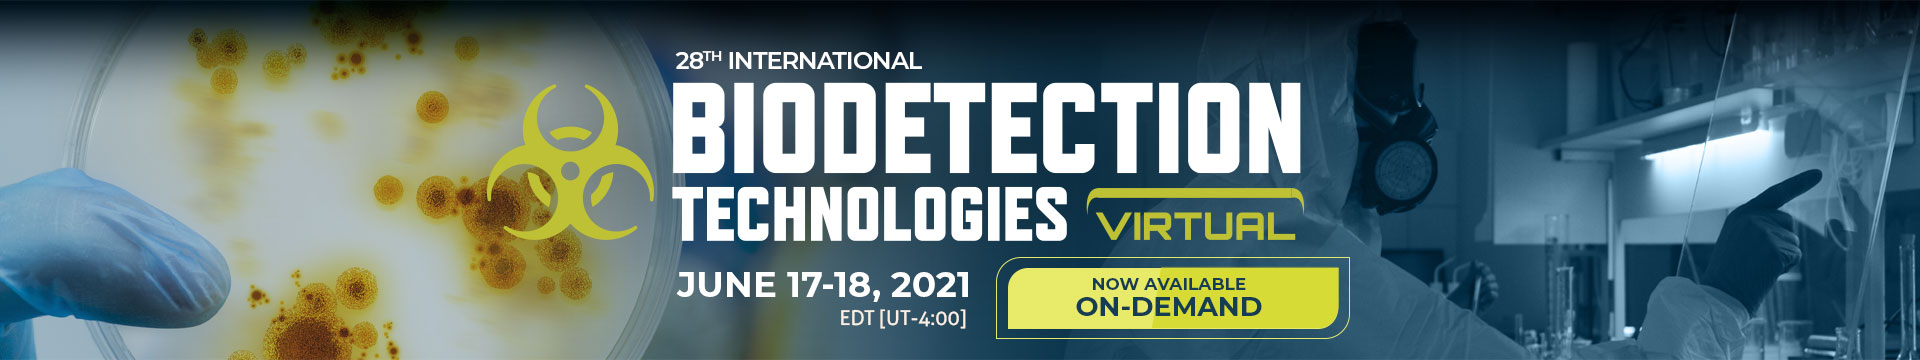 International Biodetection Technologies Banner Image